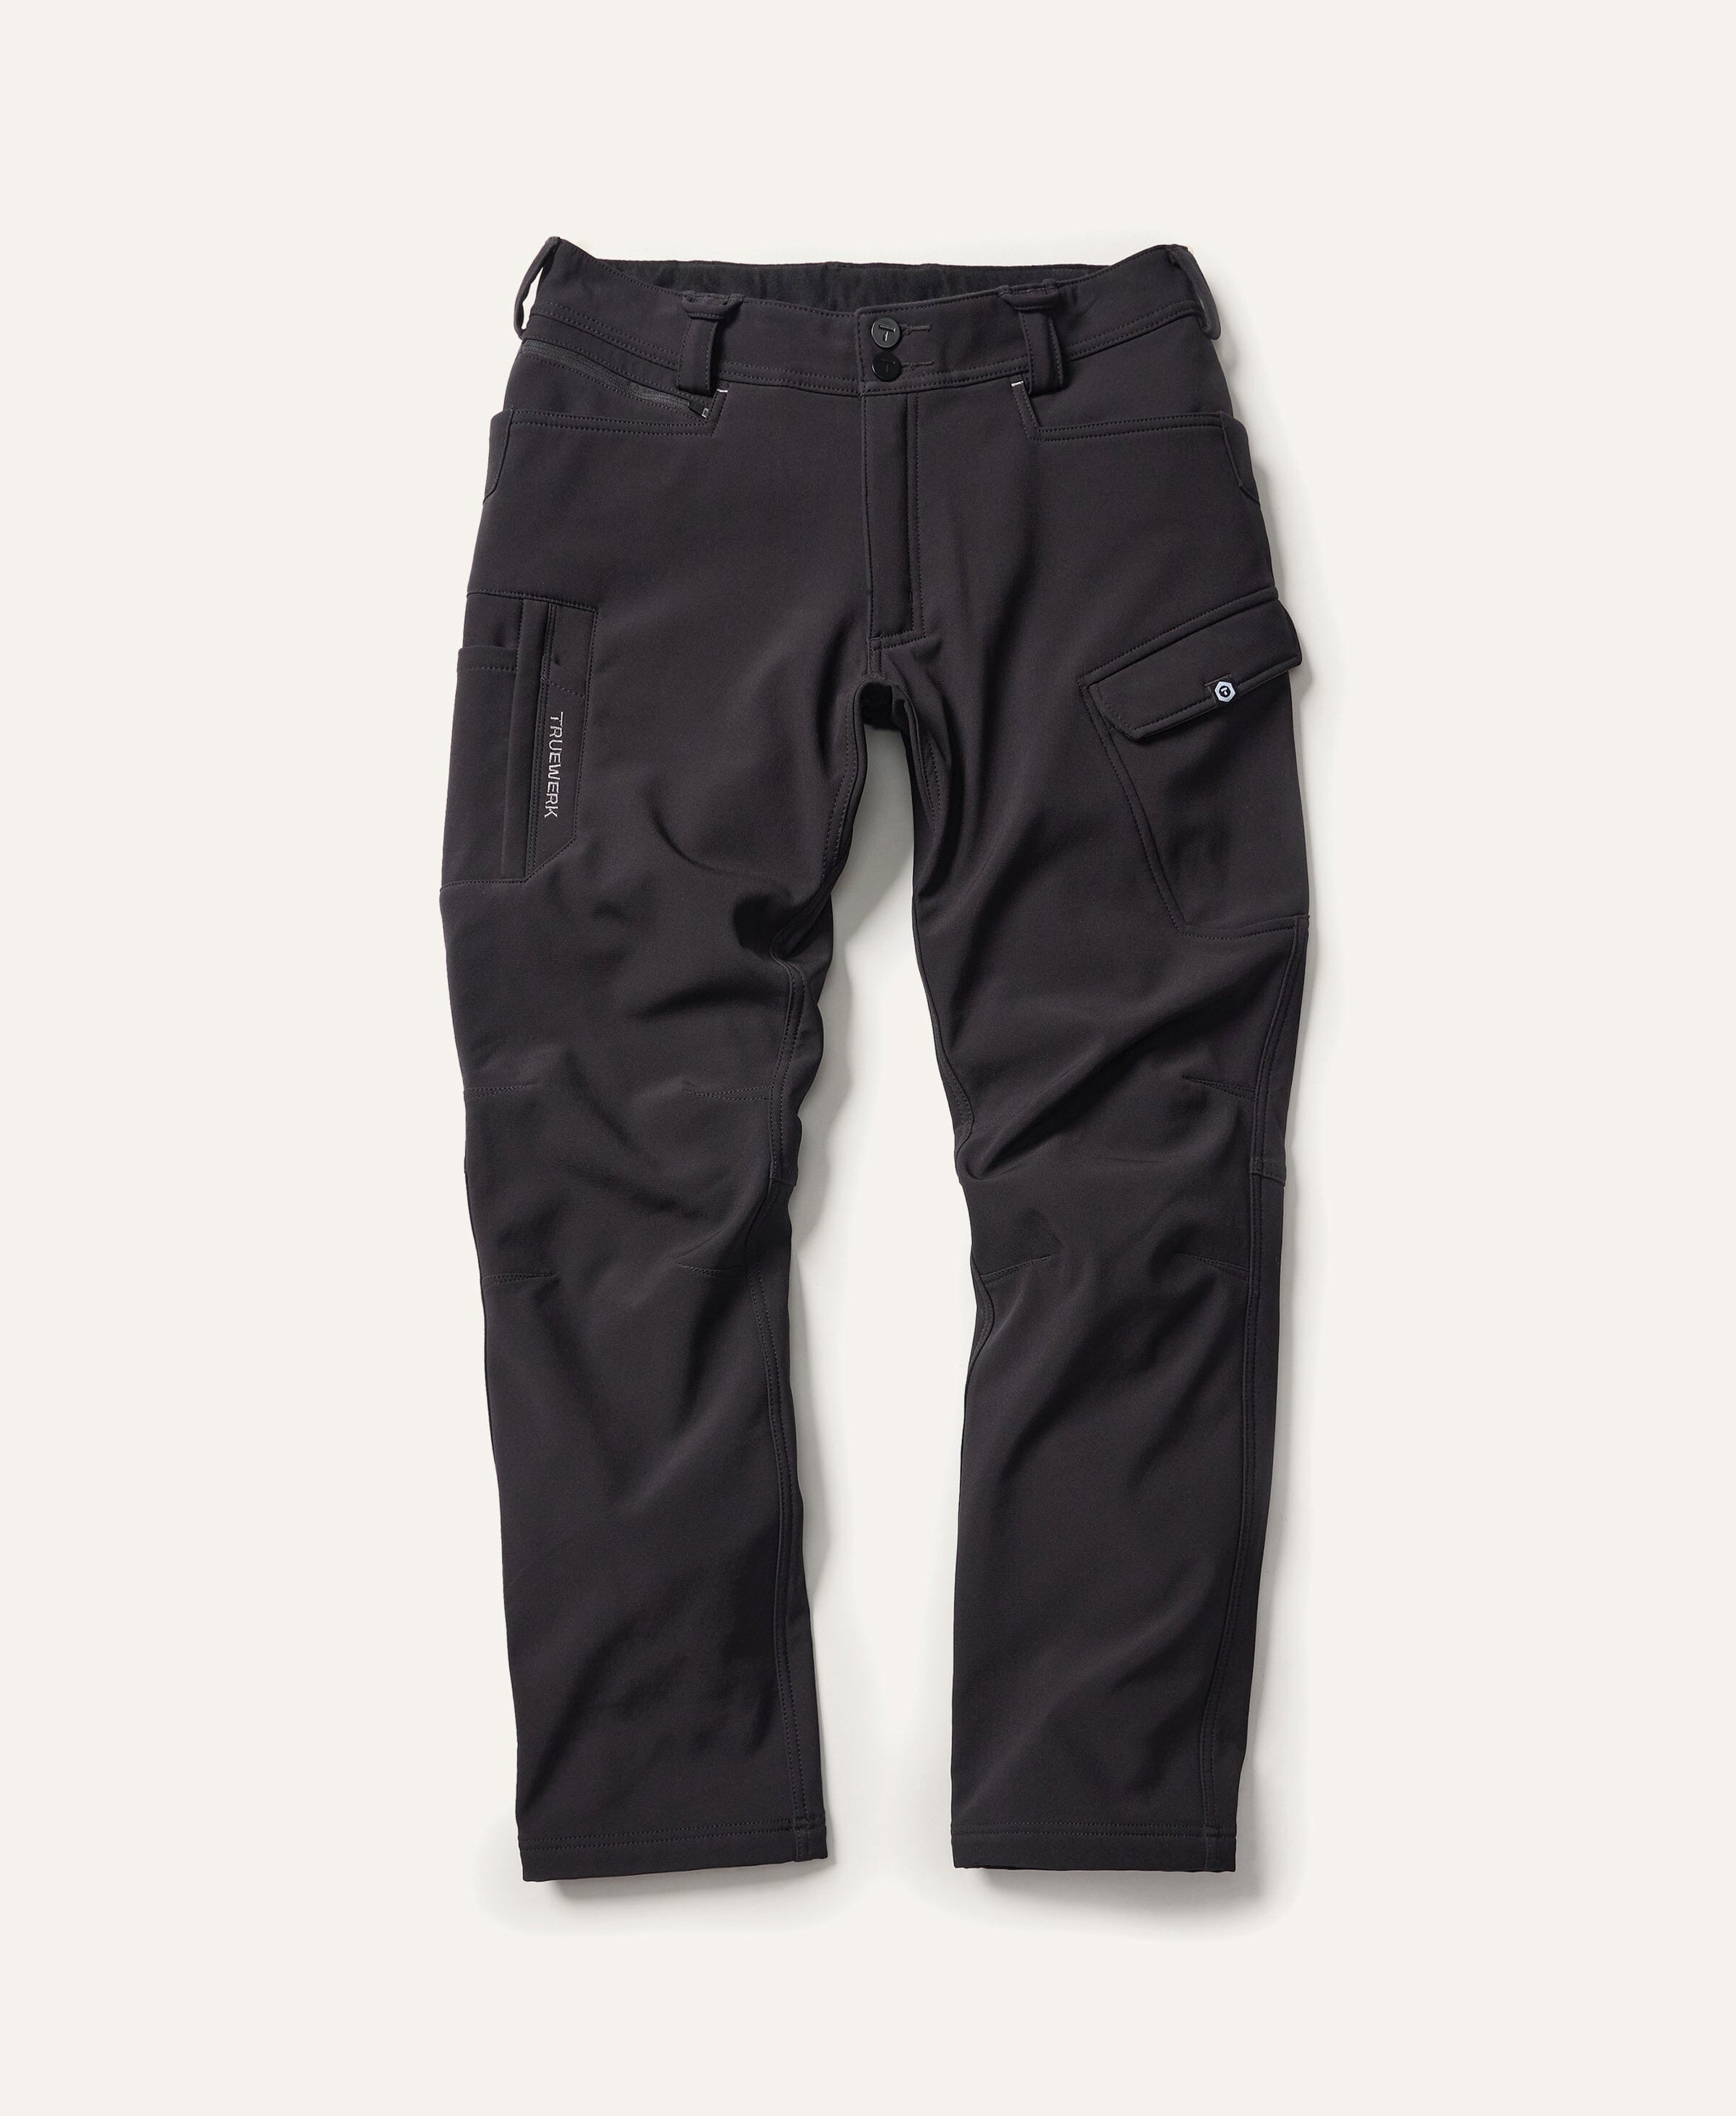 OCHENTA Men's Cotton Military Cargo Pants, 8 Pockets Work Combat